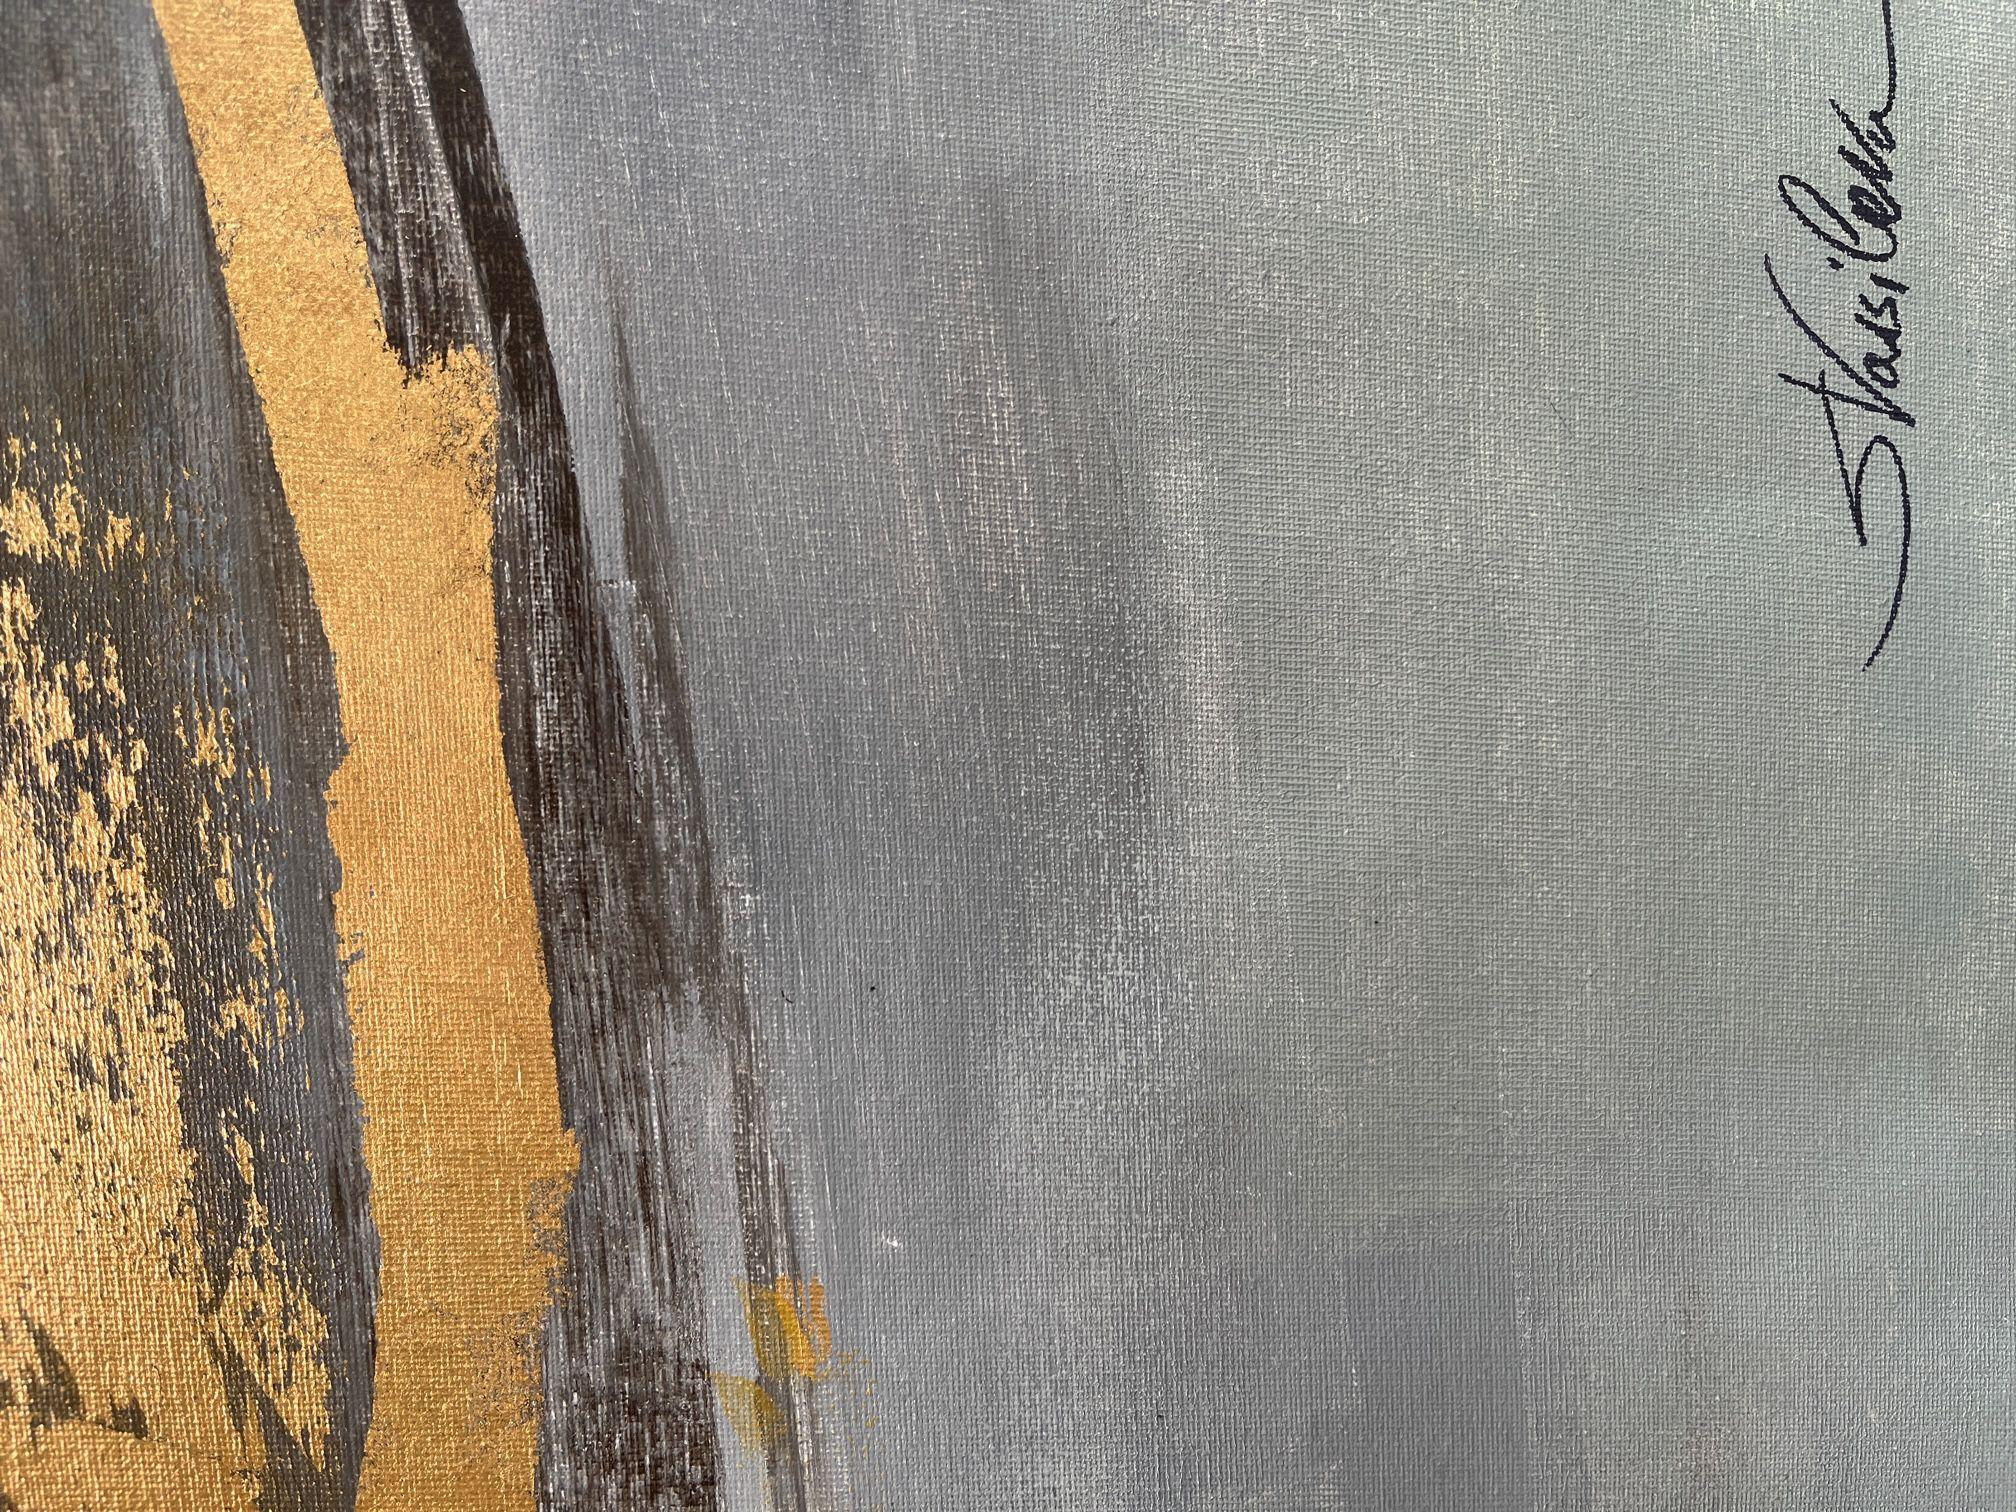 Neige scintillante, peinture, acrylique sur toile - Painting de silvia vassileva